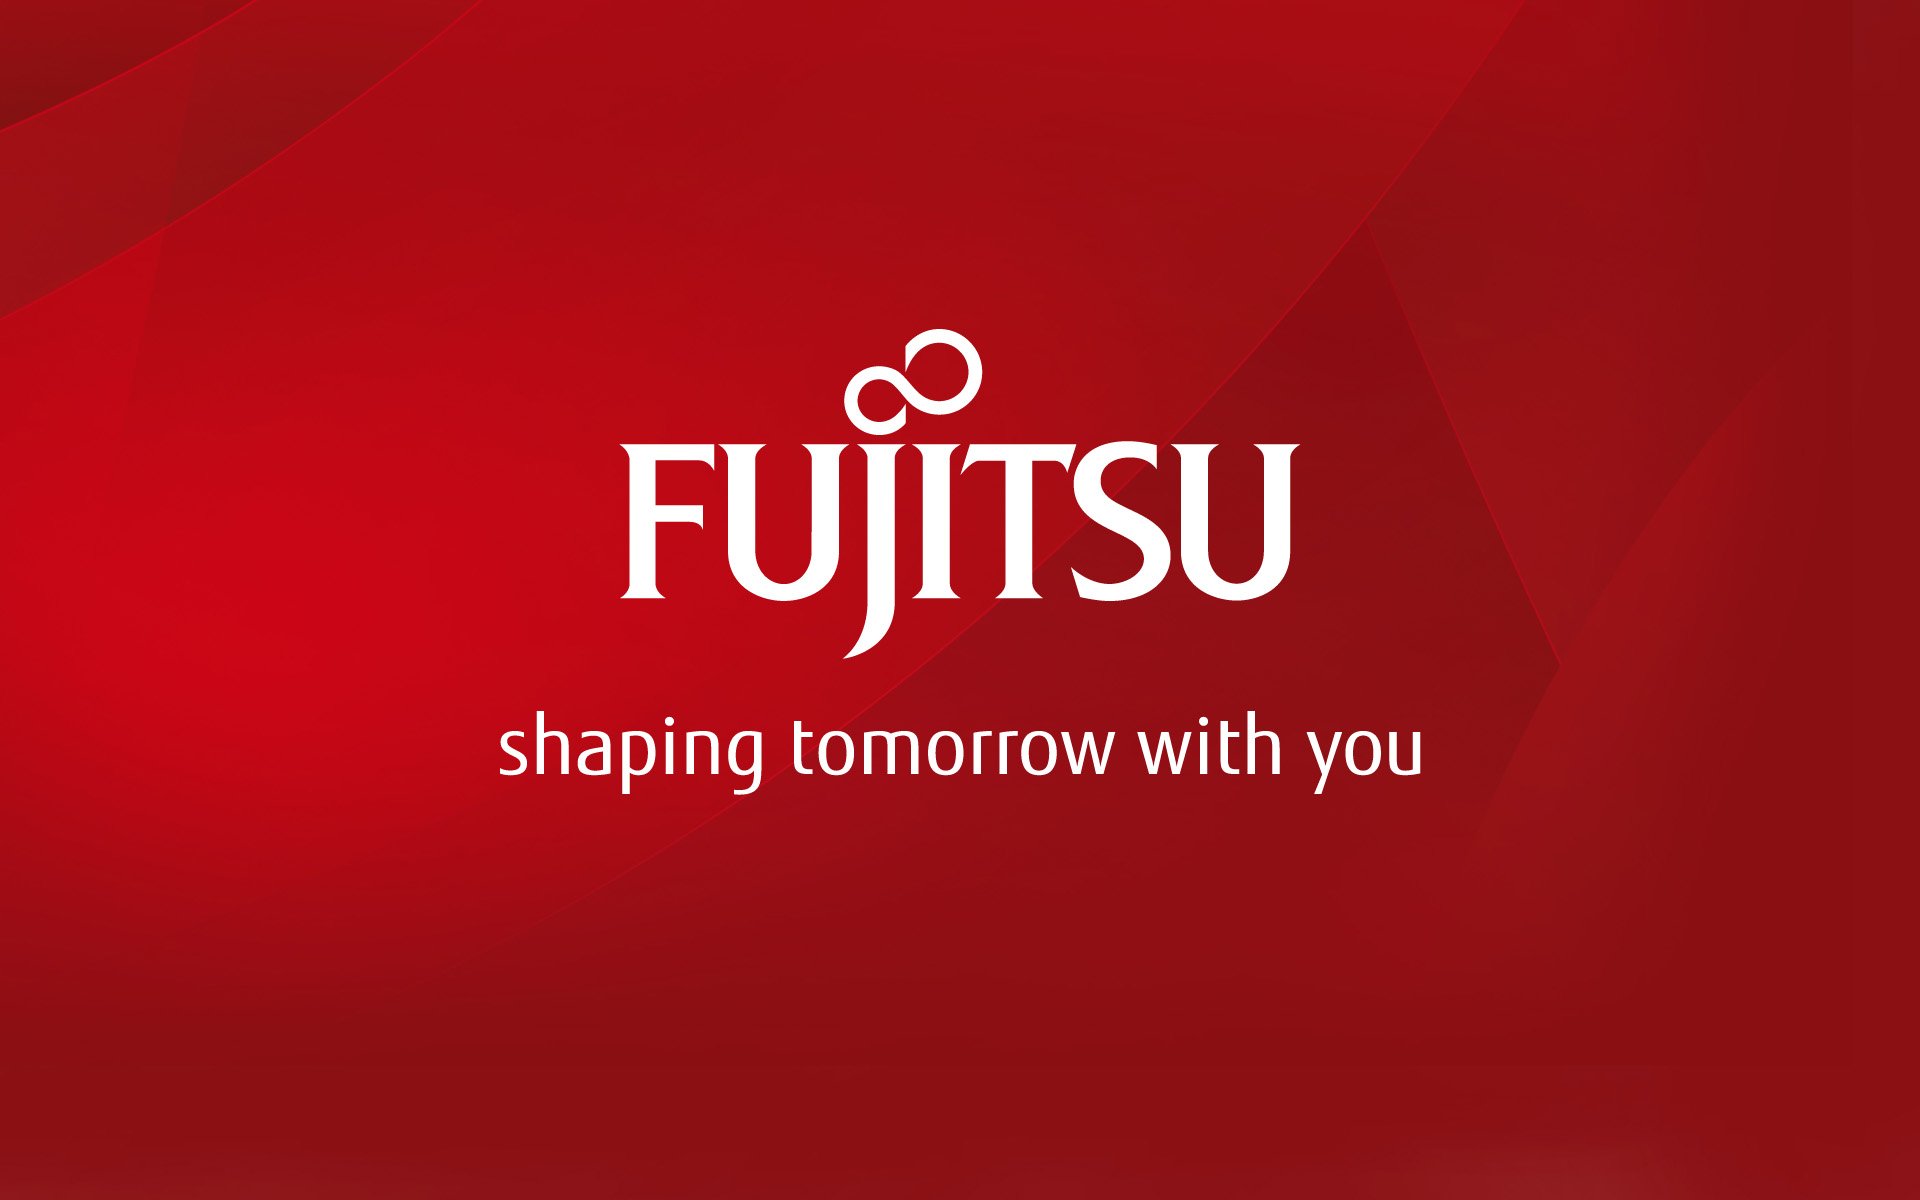 Fujitsu Computer Wallpapers Hd Desktop And Mobile Backgrounds